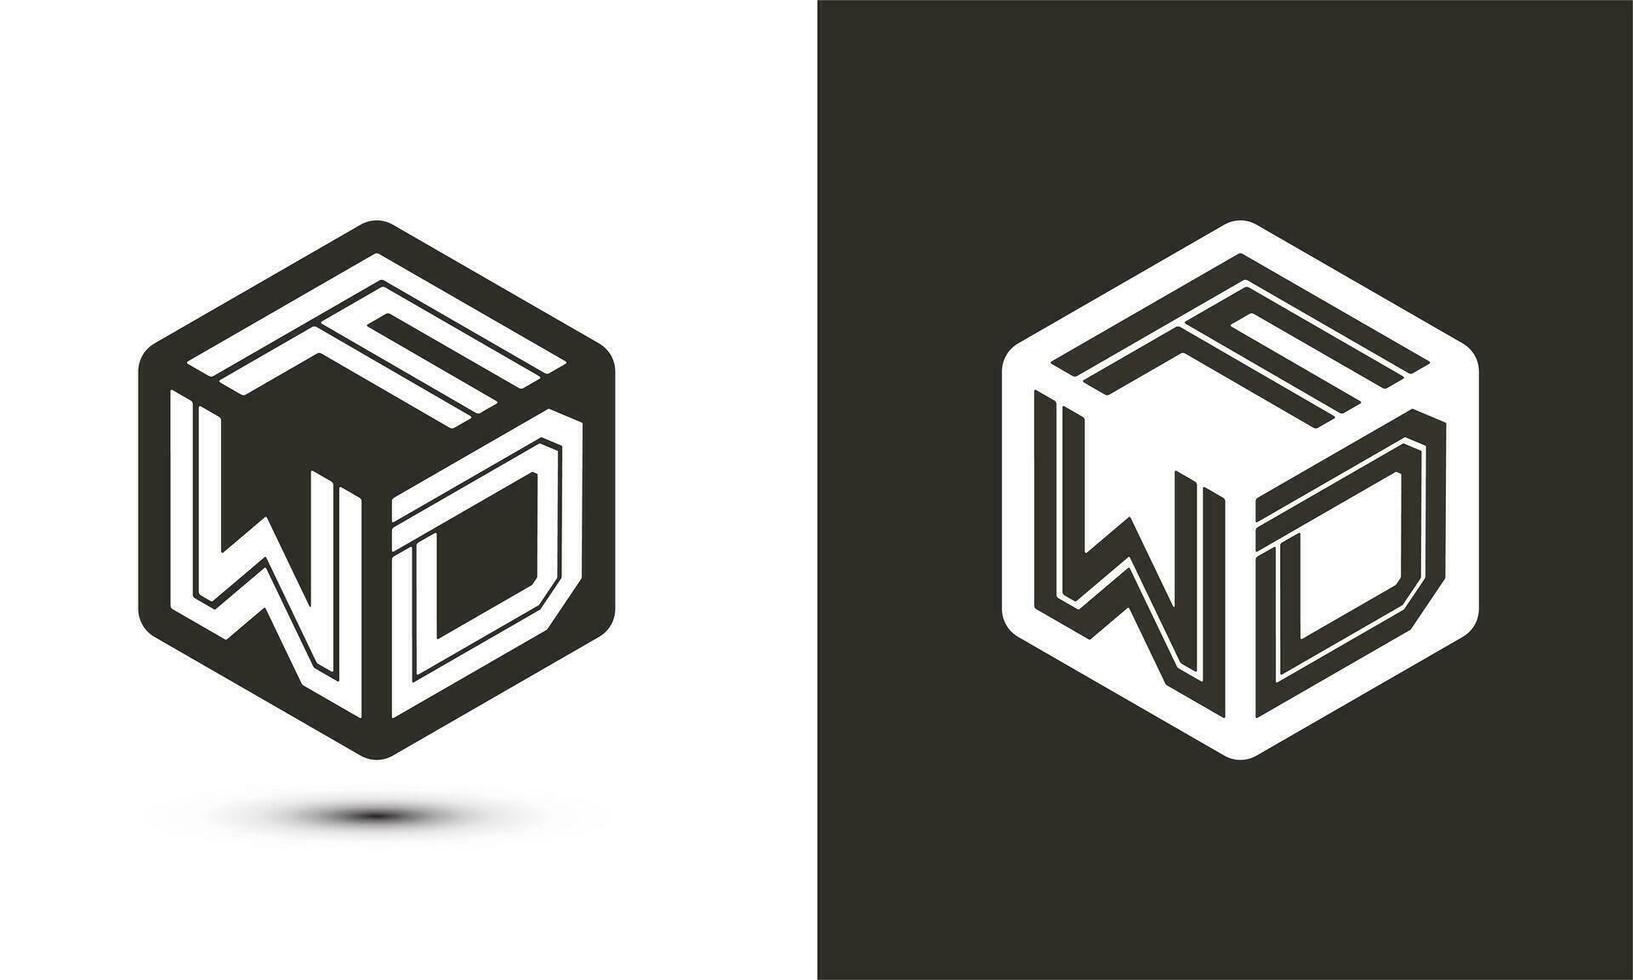 F W D letter logo design with illustrator cube logo, vector logo modern alphabet font overlap style. Premium Business logo icon. White color on black background